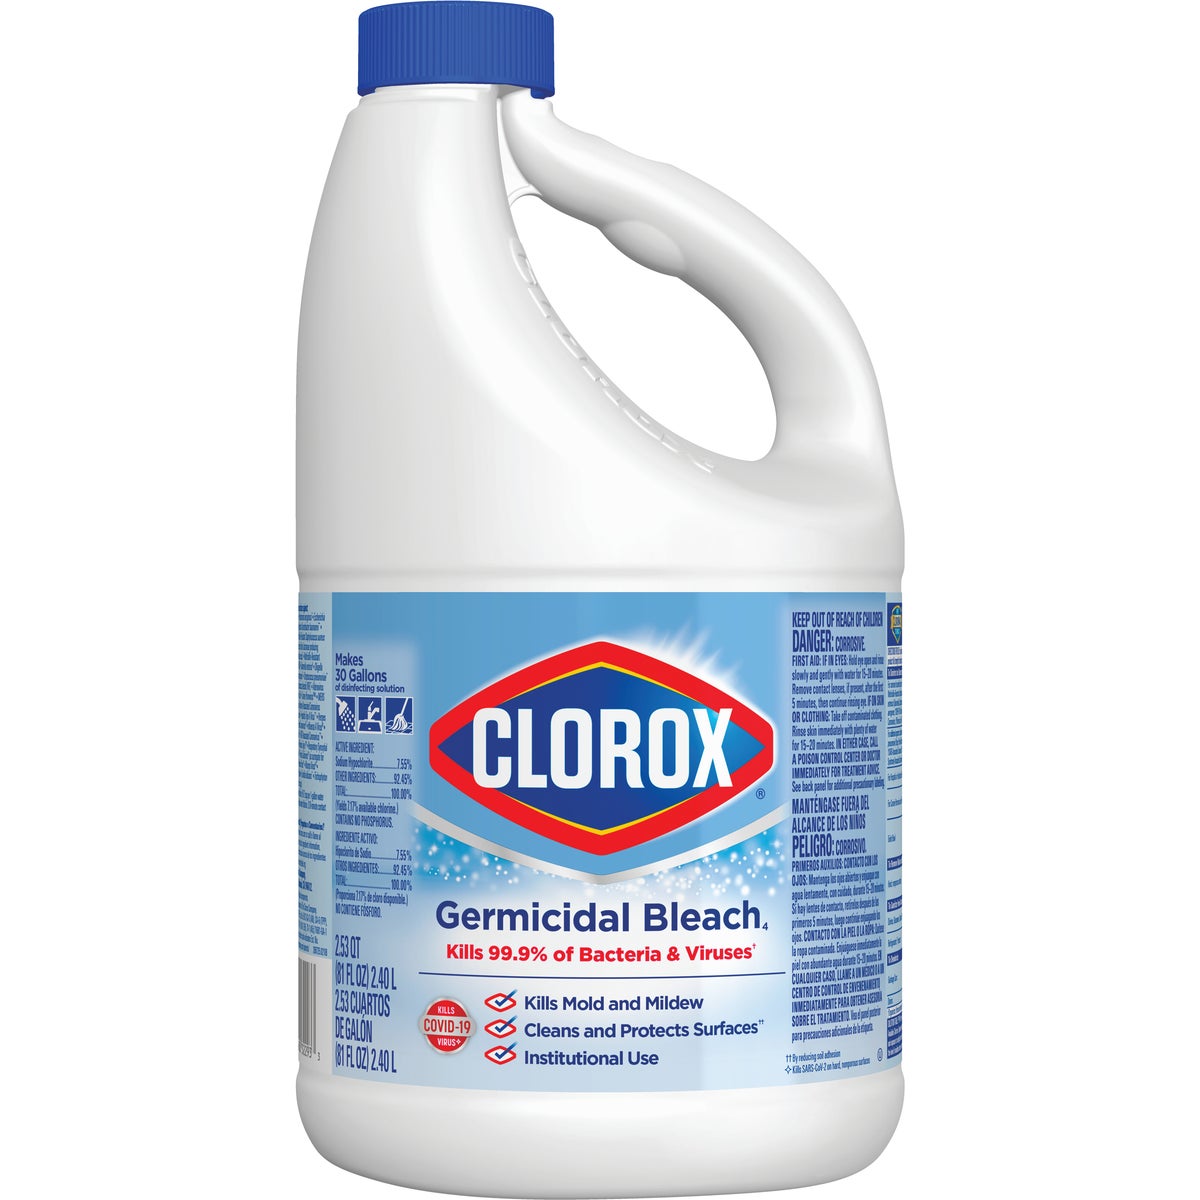 Clorox 81 Oz. Concentrated Germicidal Bleach